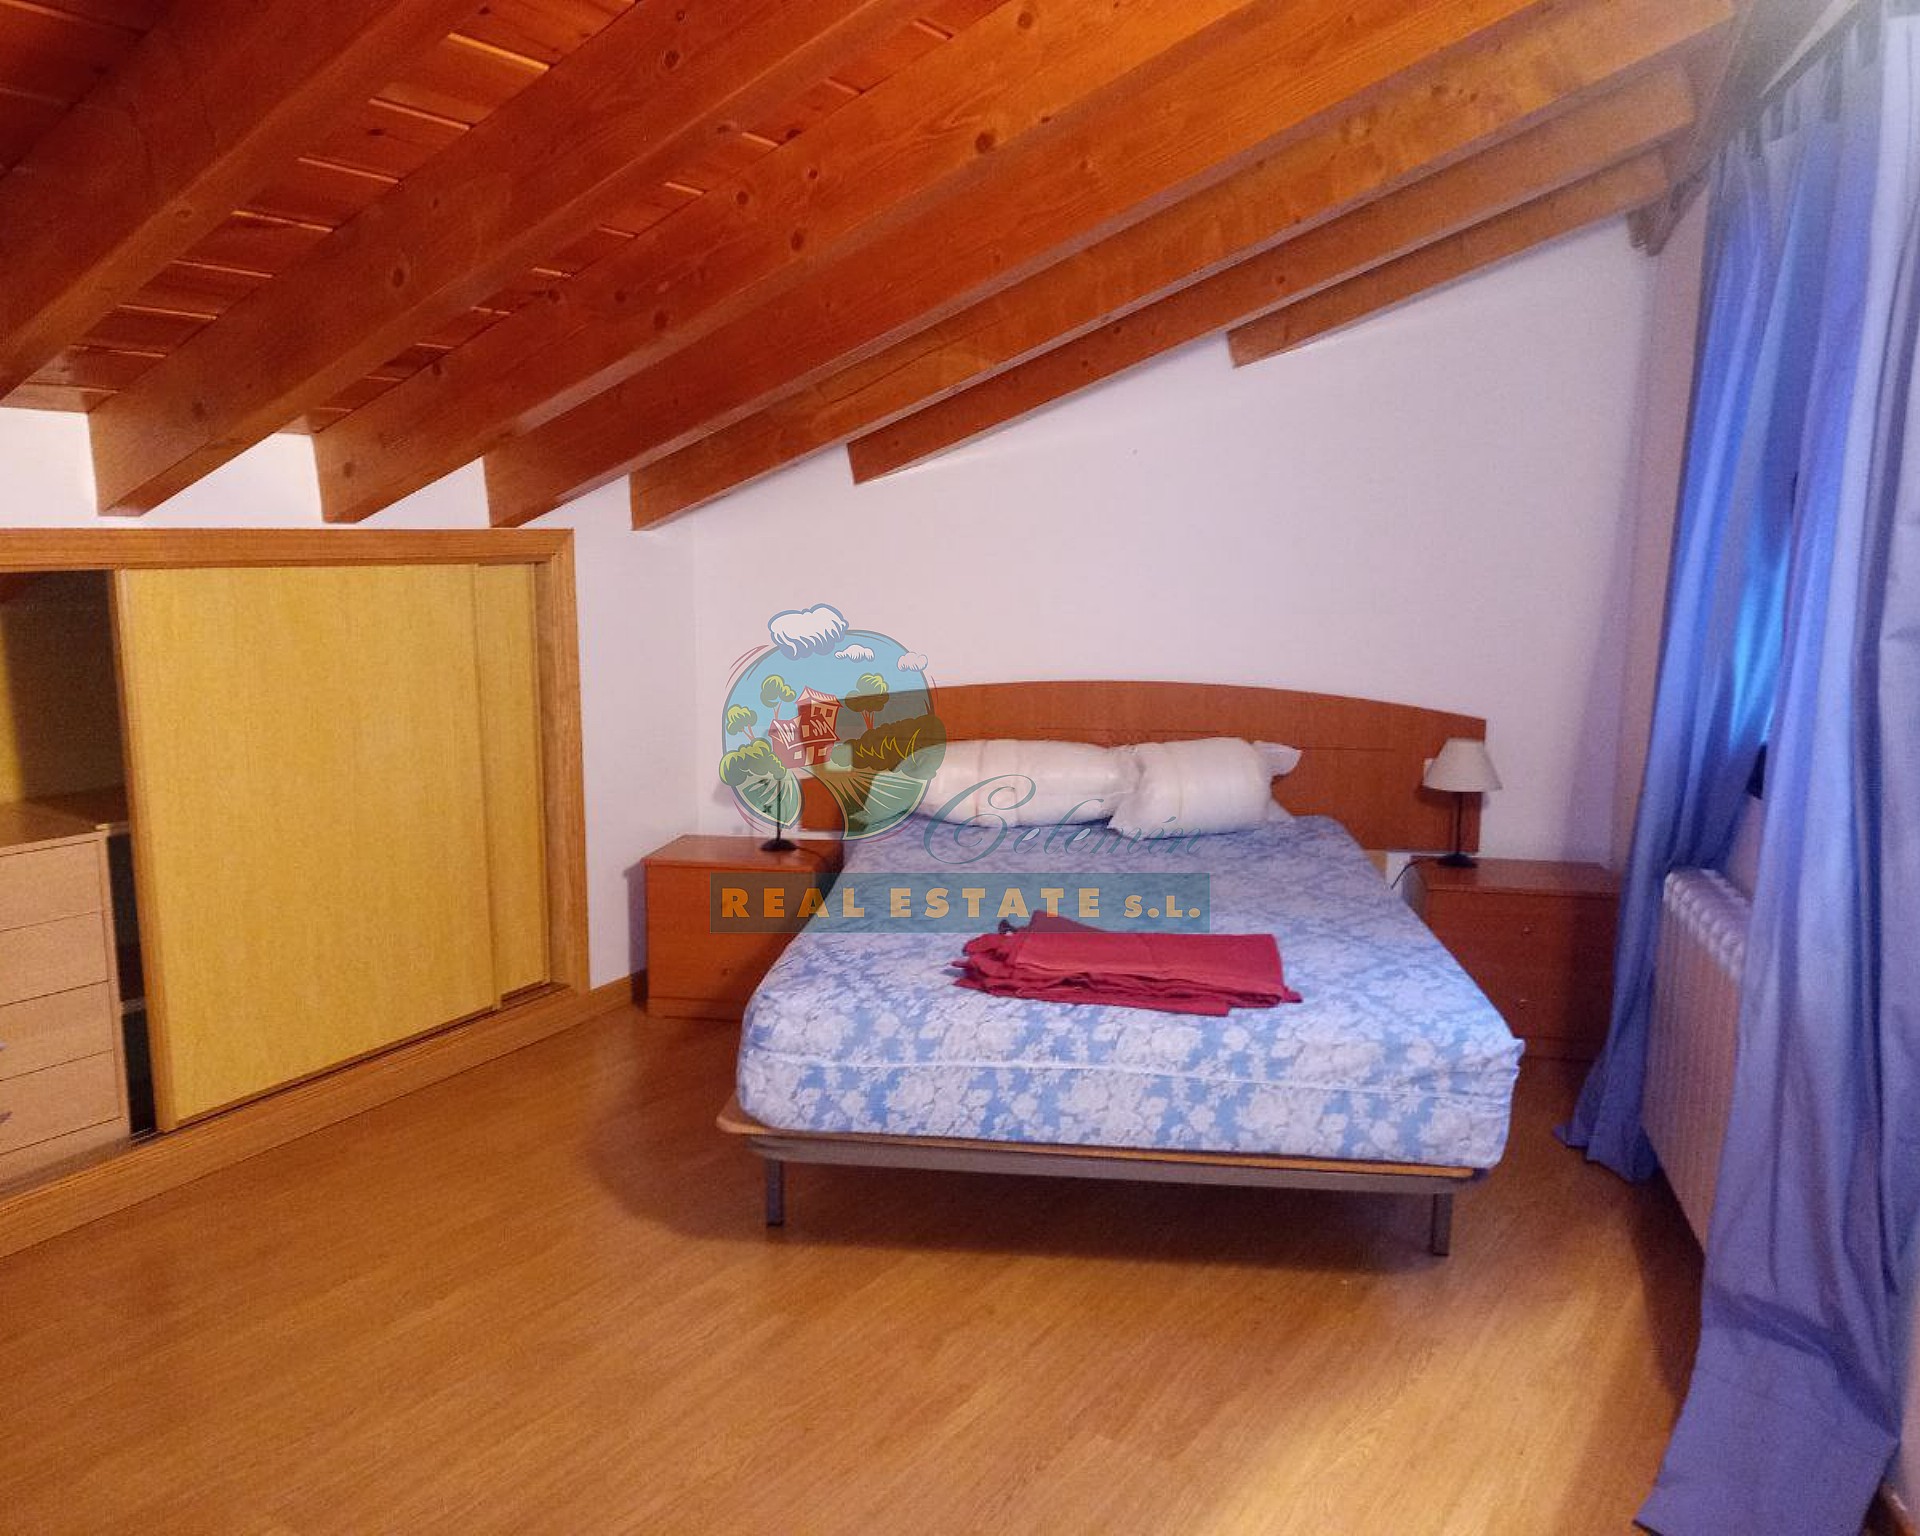 3 bedroom flat in Sierra de Gredos.